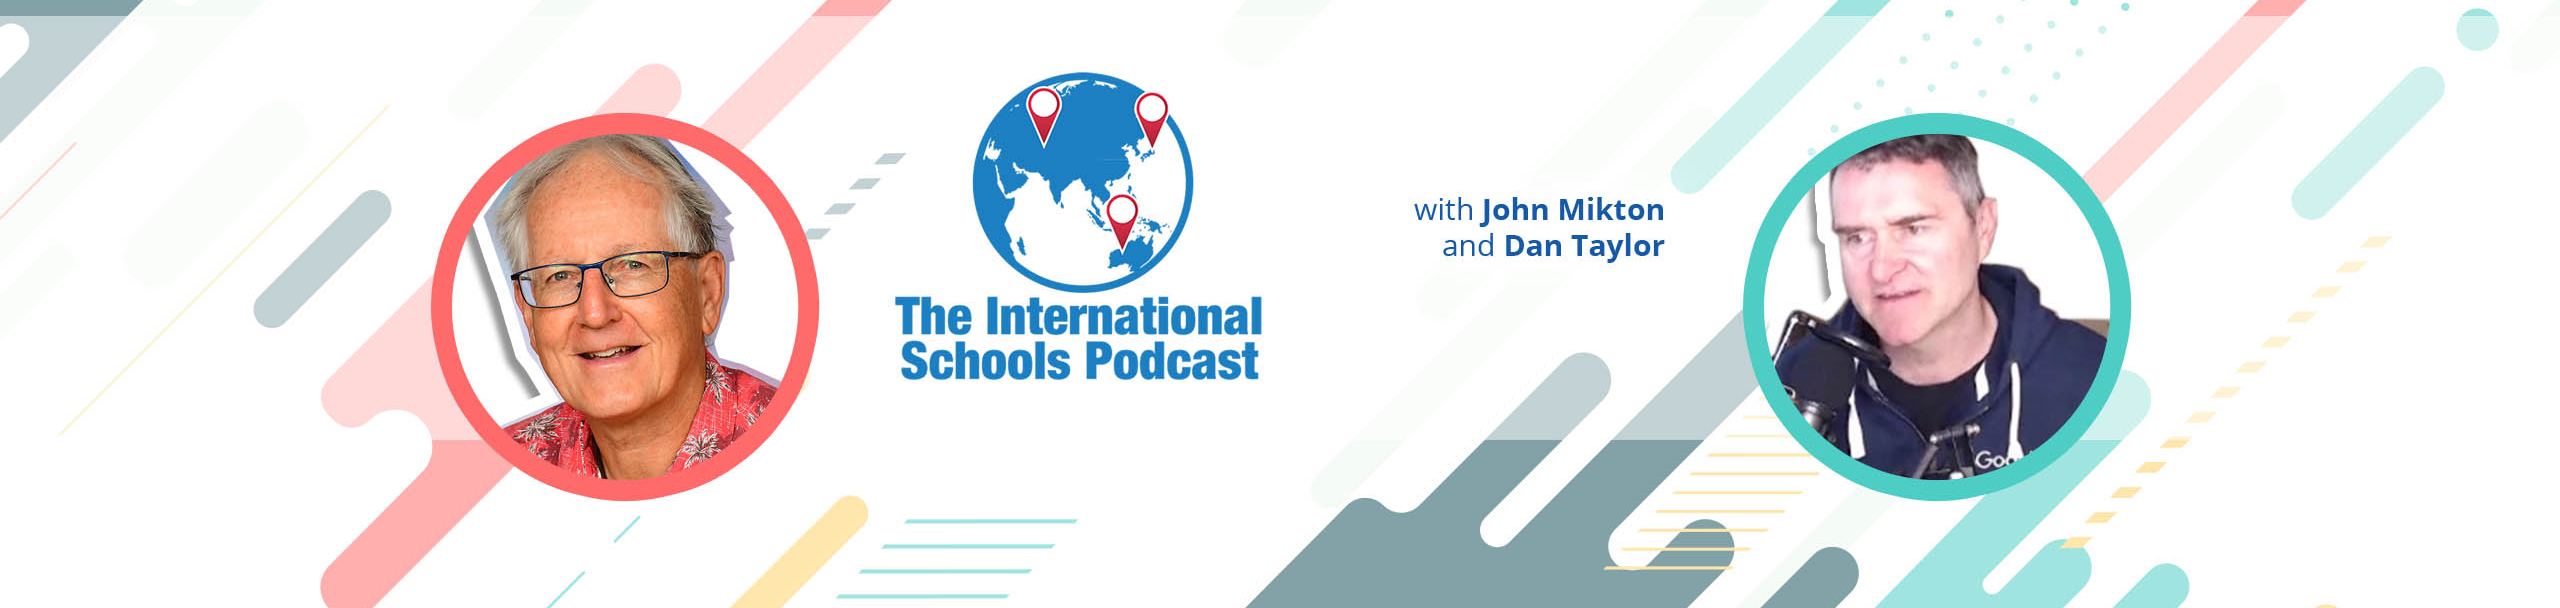 The International Schools Podcast